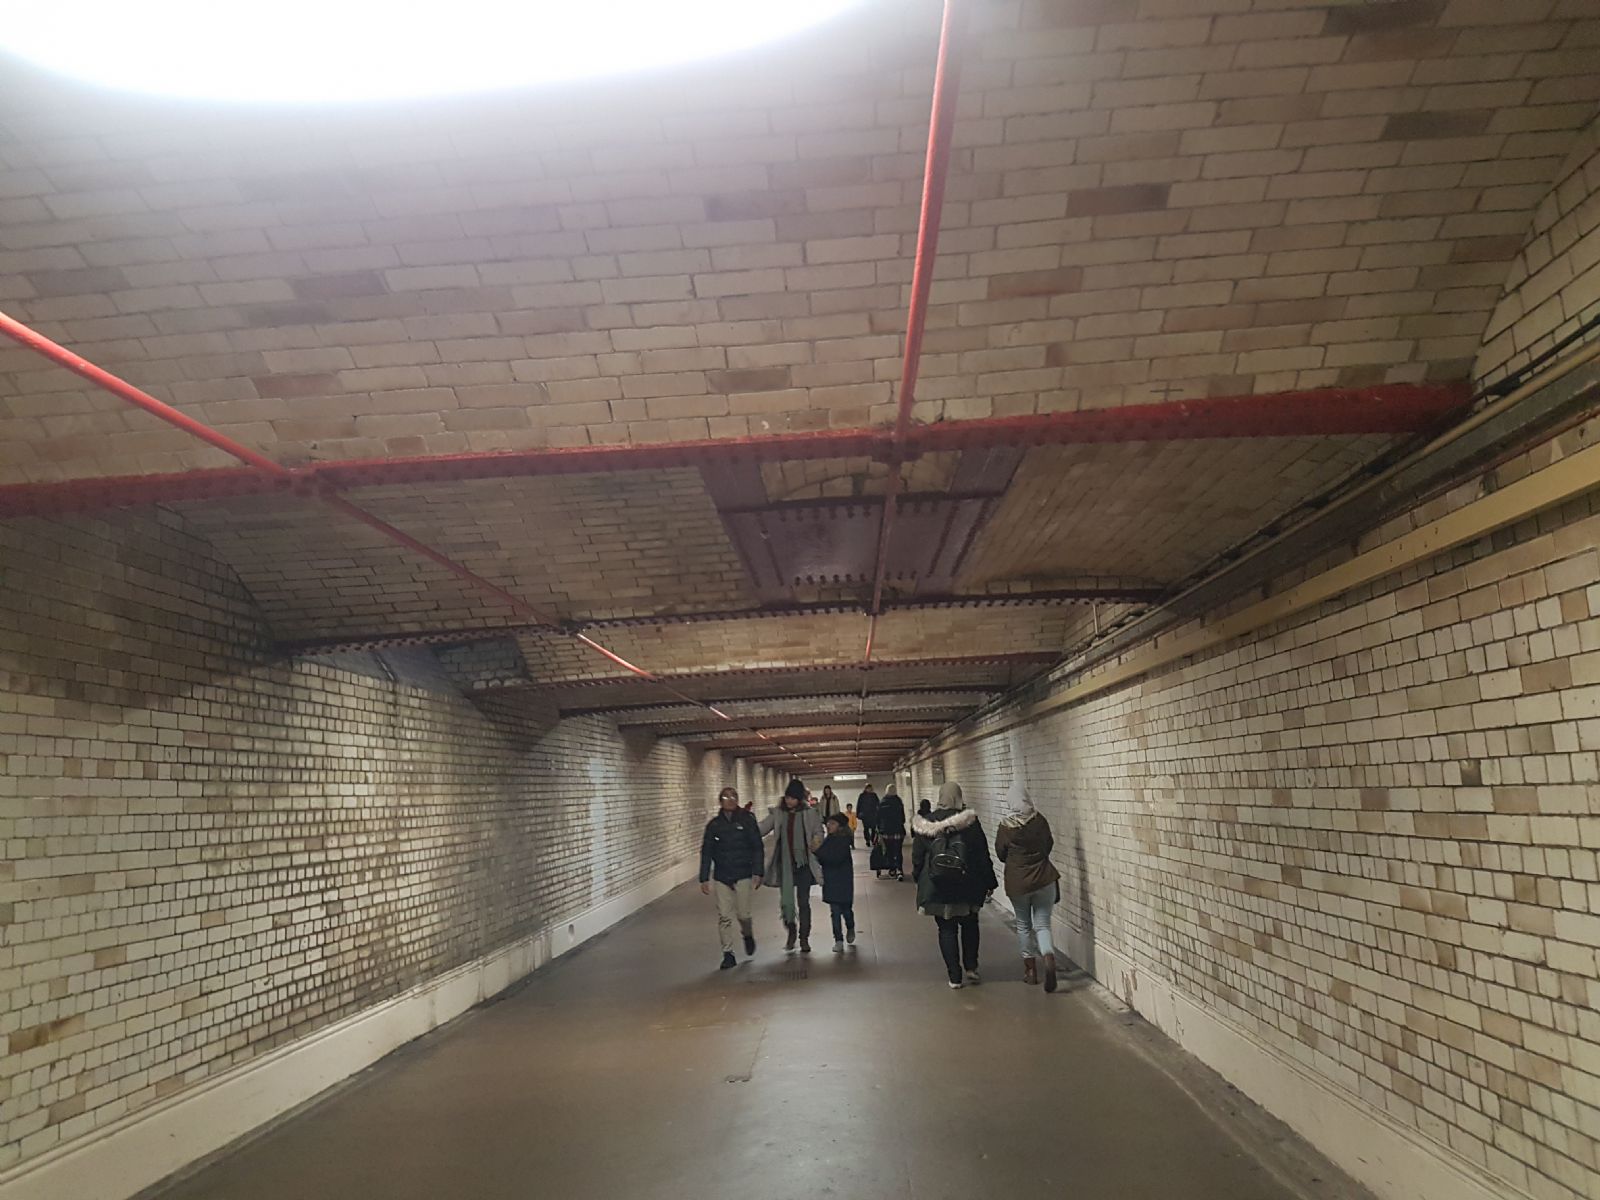 Tunnel, South Kensington Station